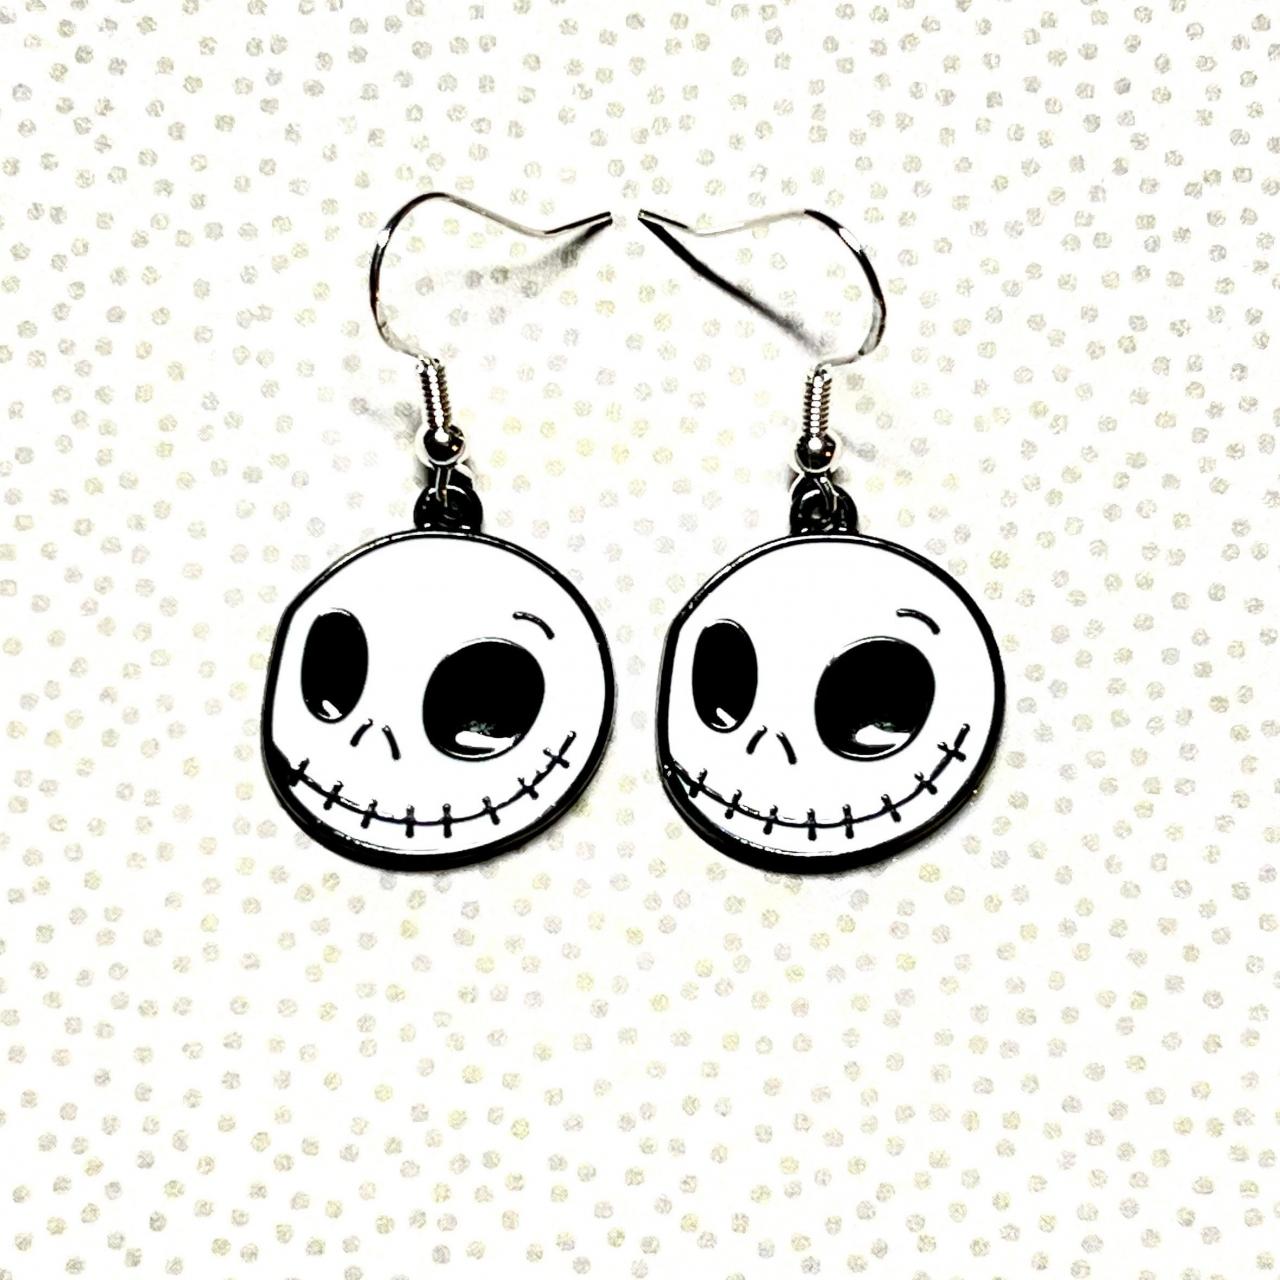 Skull earrings, Skeleton accessories, skeleton jewelry, jack face earrings, sterling silver, trick or treat, Halloween earrings